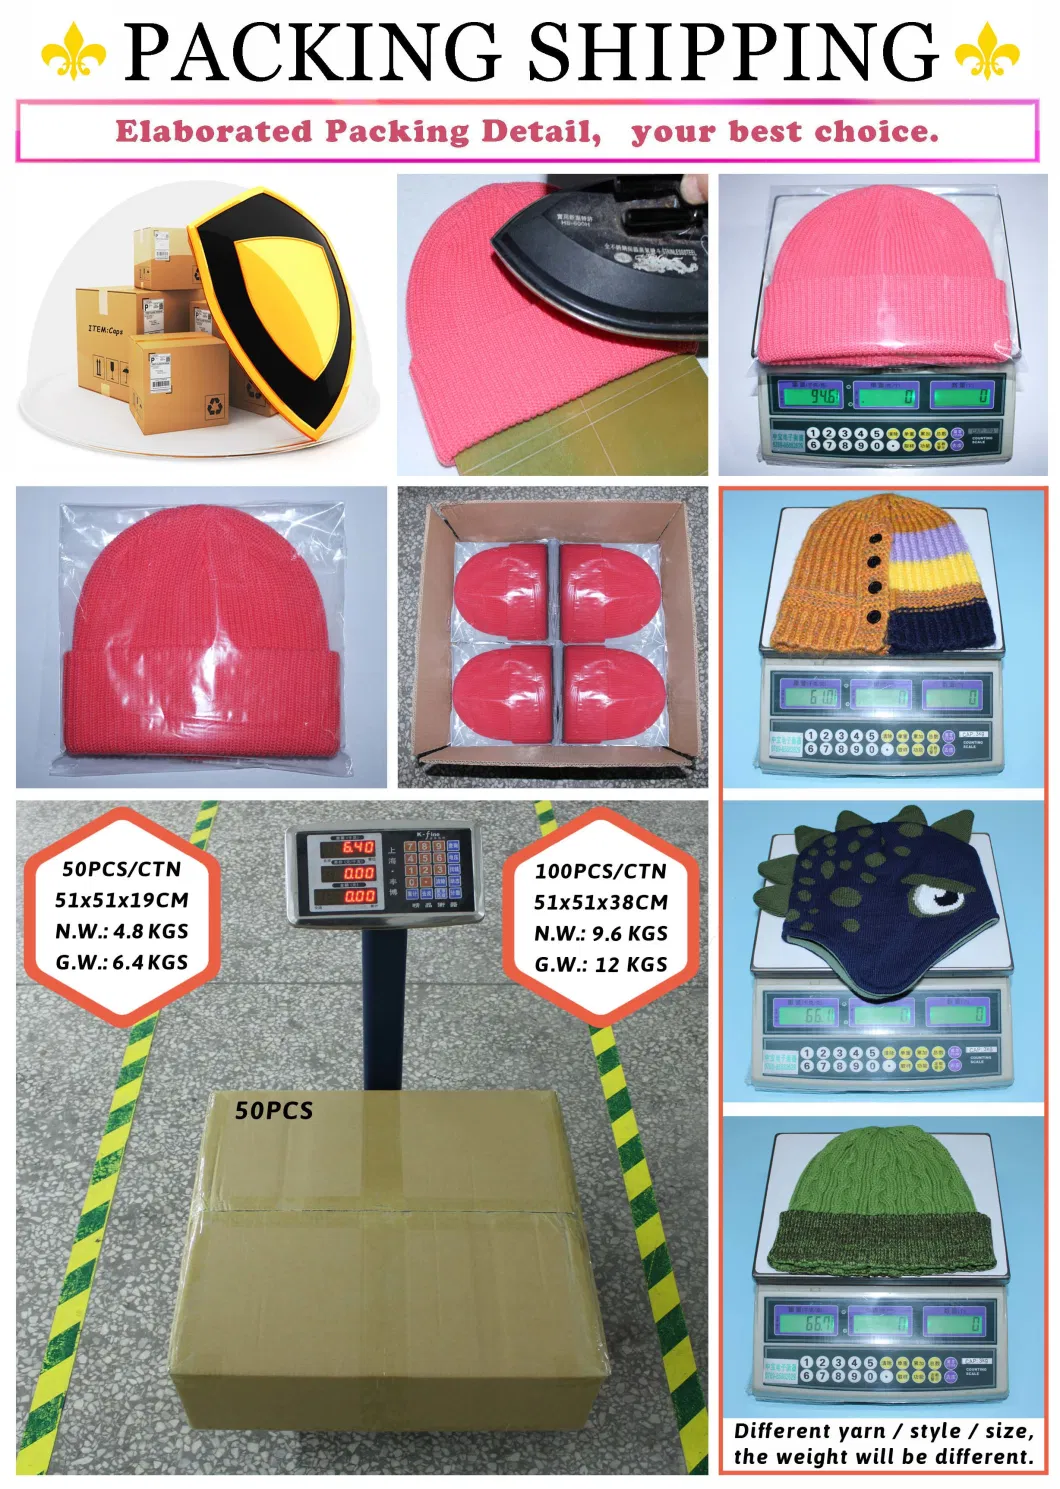 Best Sales Custom Logo and Color Sun Visor Hats for Women Outdoor Sport 3D Embroidery PVC Sun Visor Cap